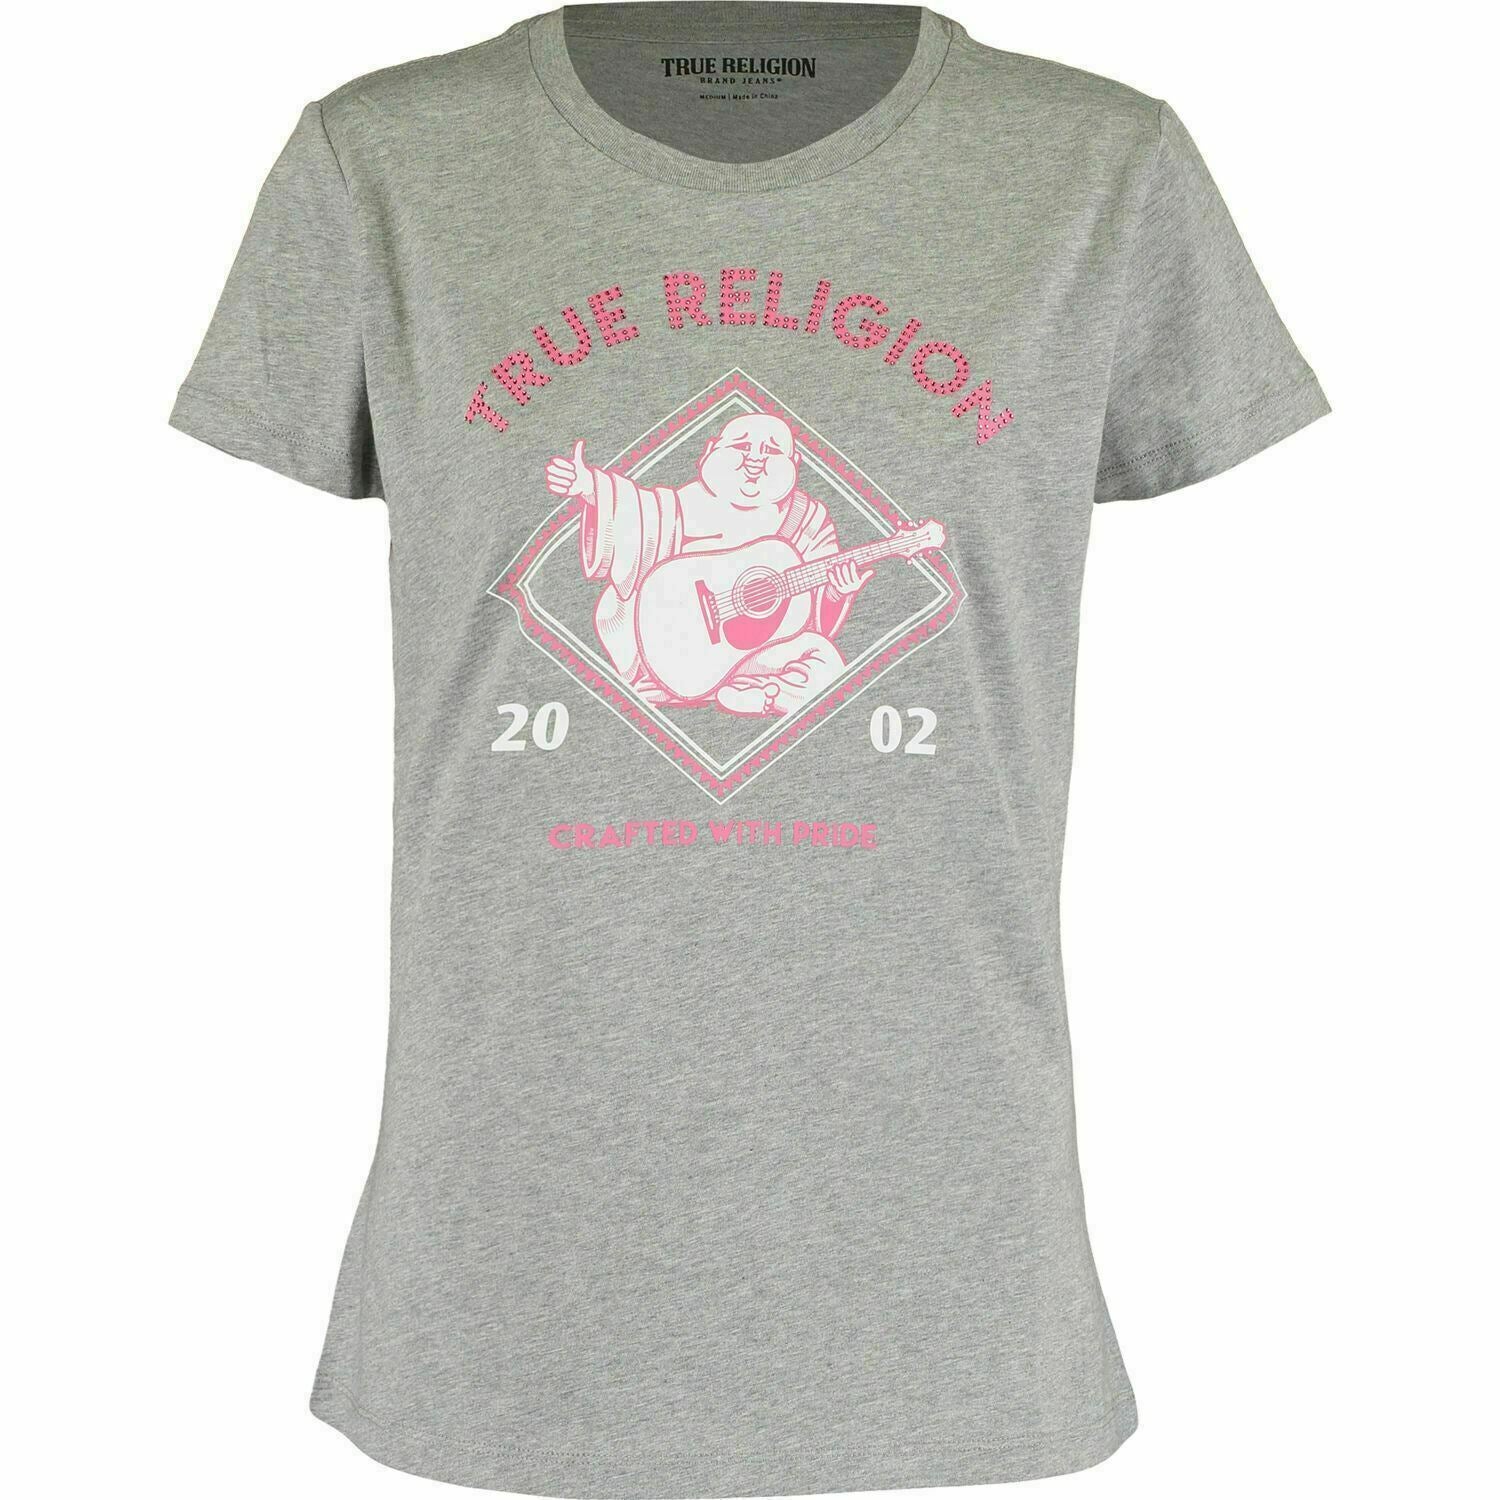 TRUE RELIGION Women's Short Sleeve Blue & Pink Buddha Print T-Shirt Top, size XL